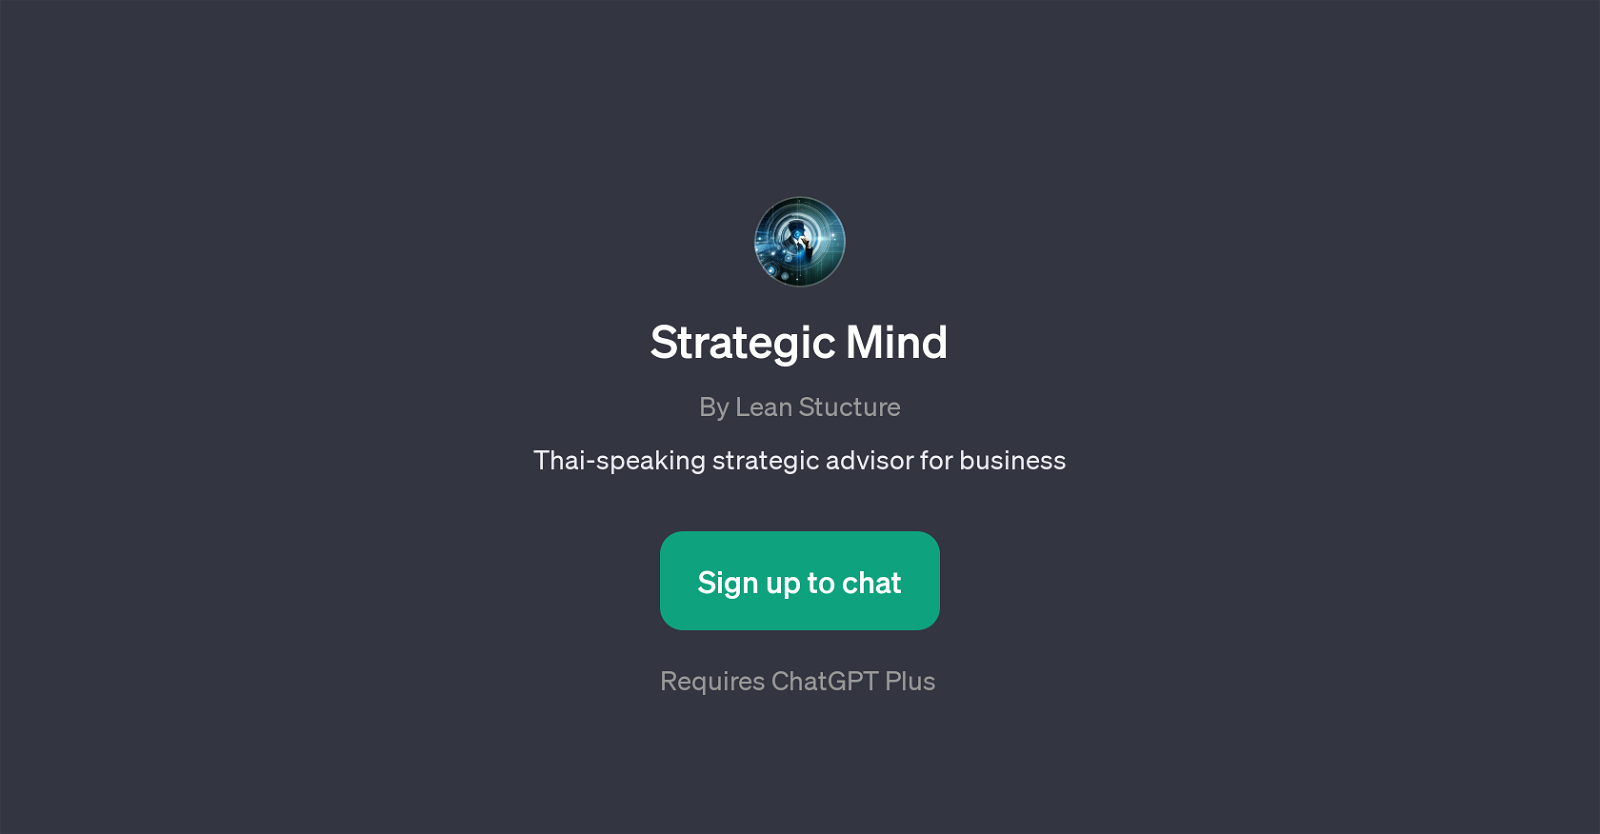 Strategic Mind website